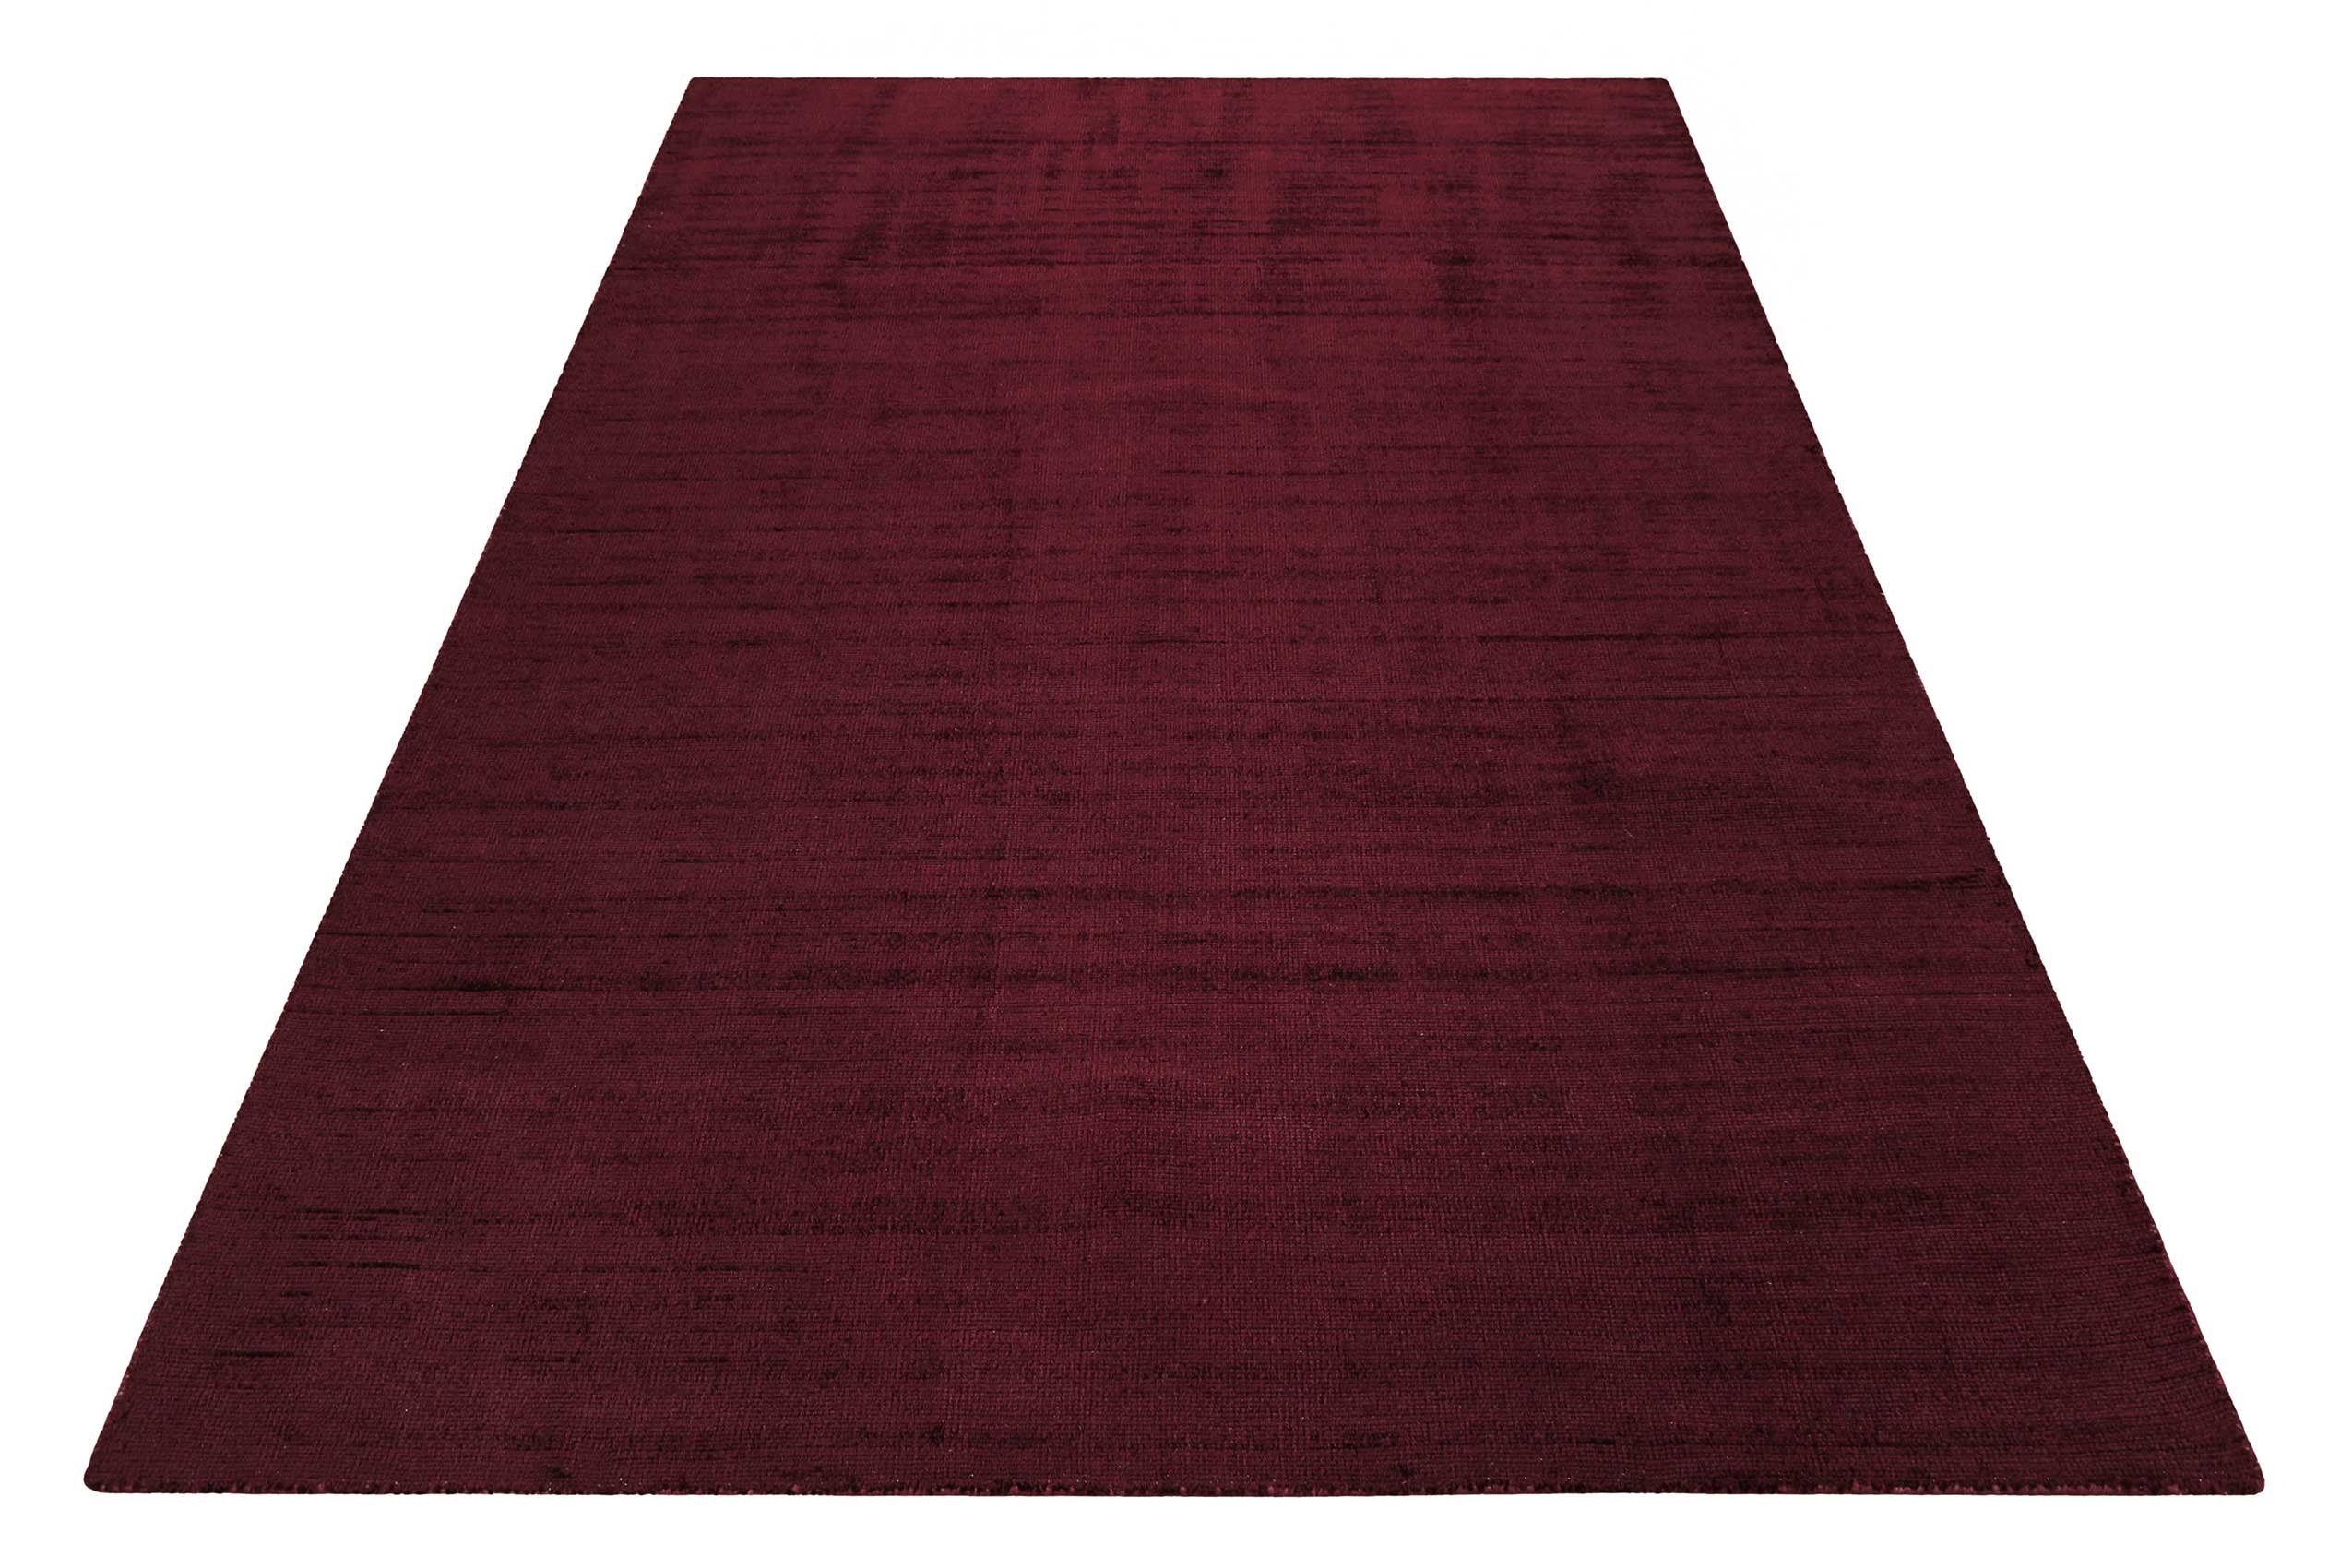 Teppich Gil, Esprit, rechteckig, Höhe: 8 mm, handgewebt, seidig glänzend, schimmernde Farbbrillianz, Melangeeffekt bordeaux rot